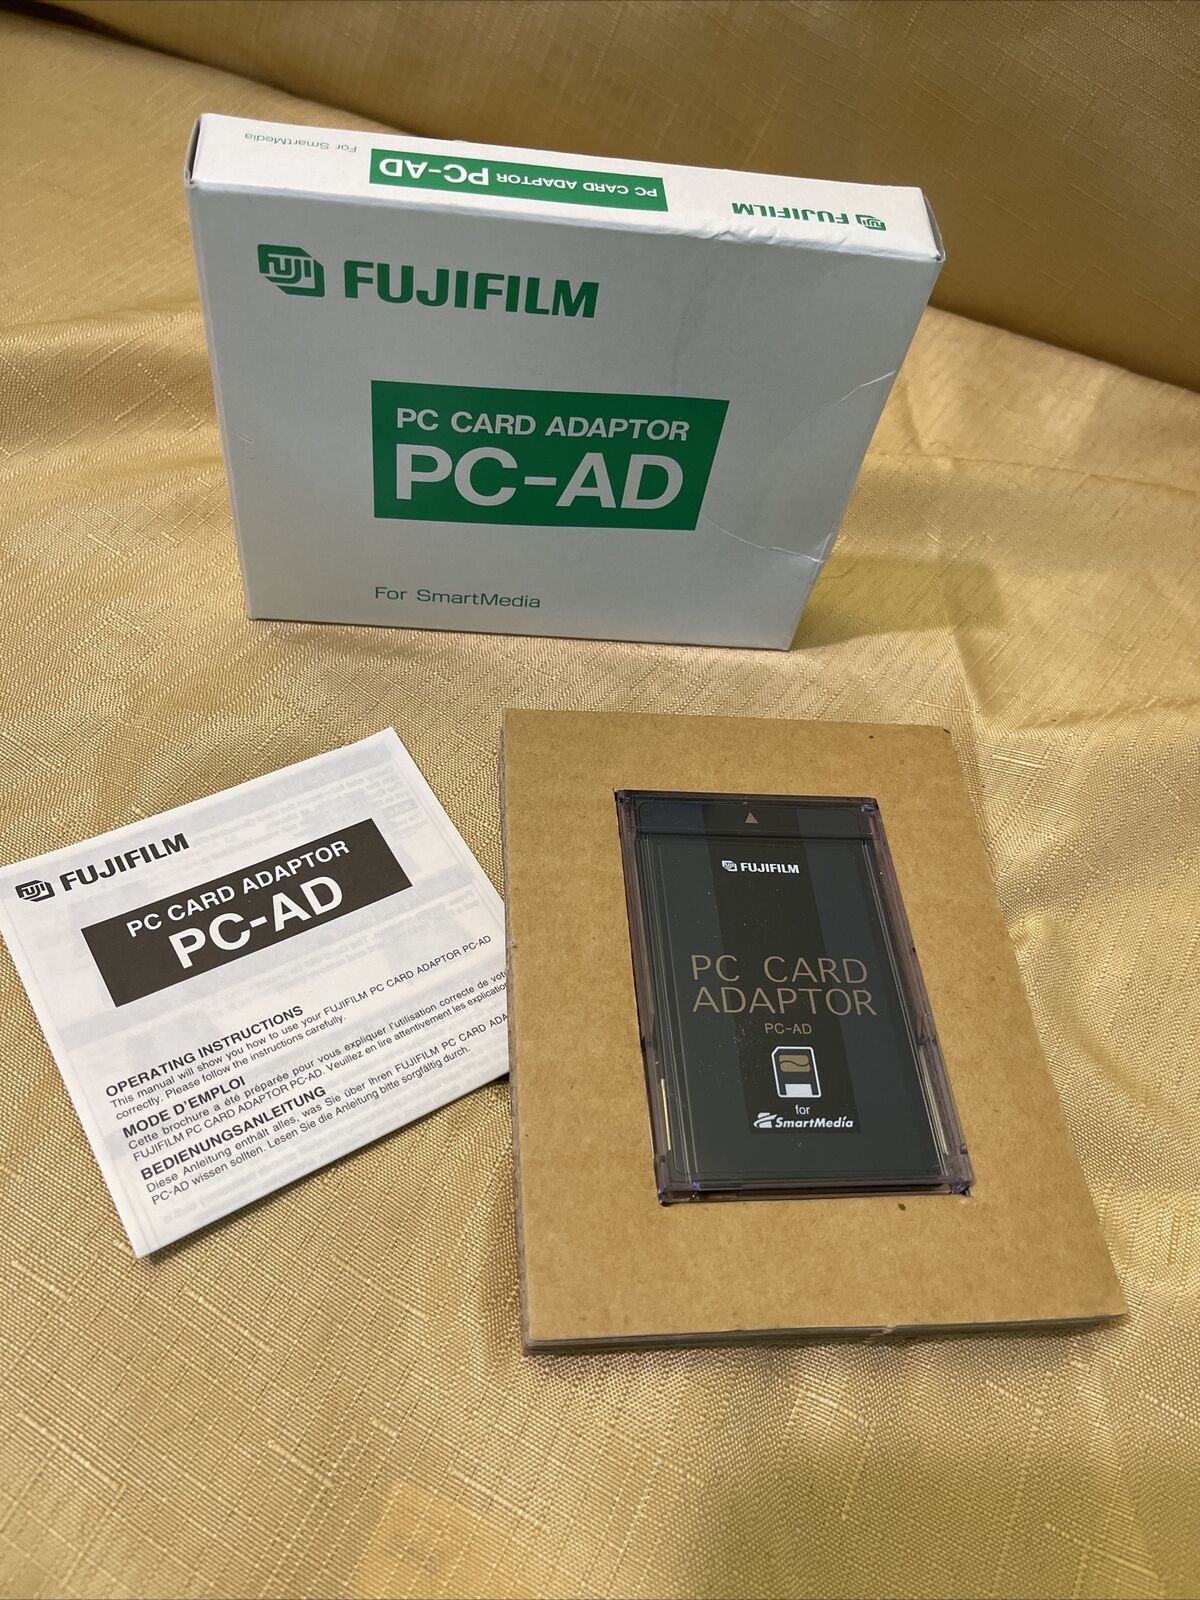 Fujifilm PC Card Adapter PC-AD for Smart Media.